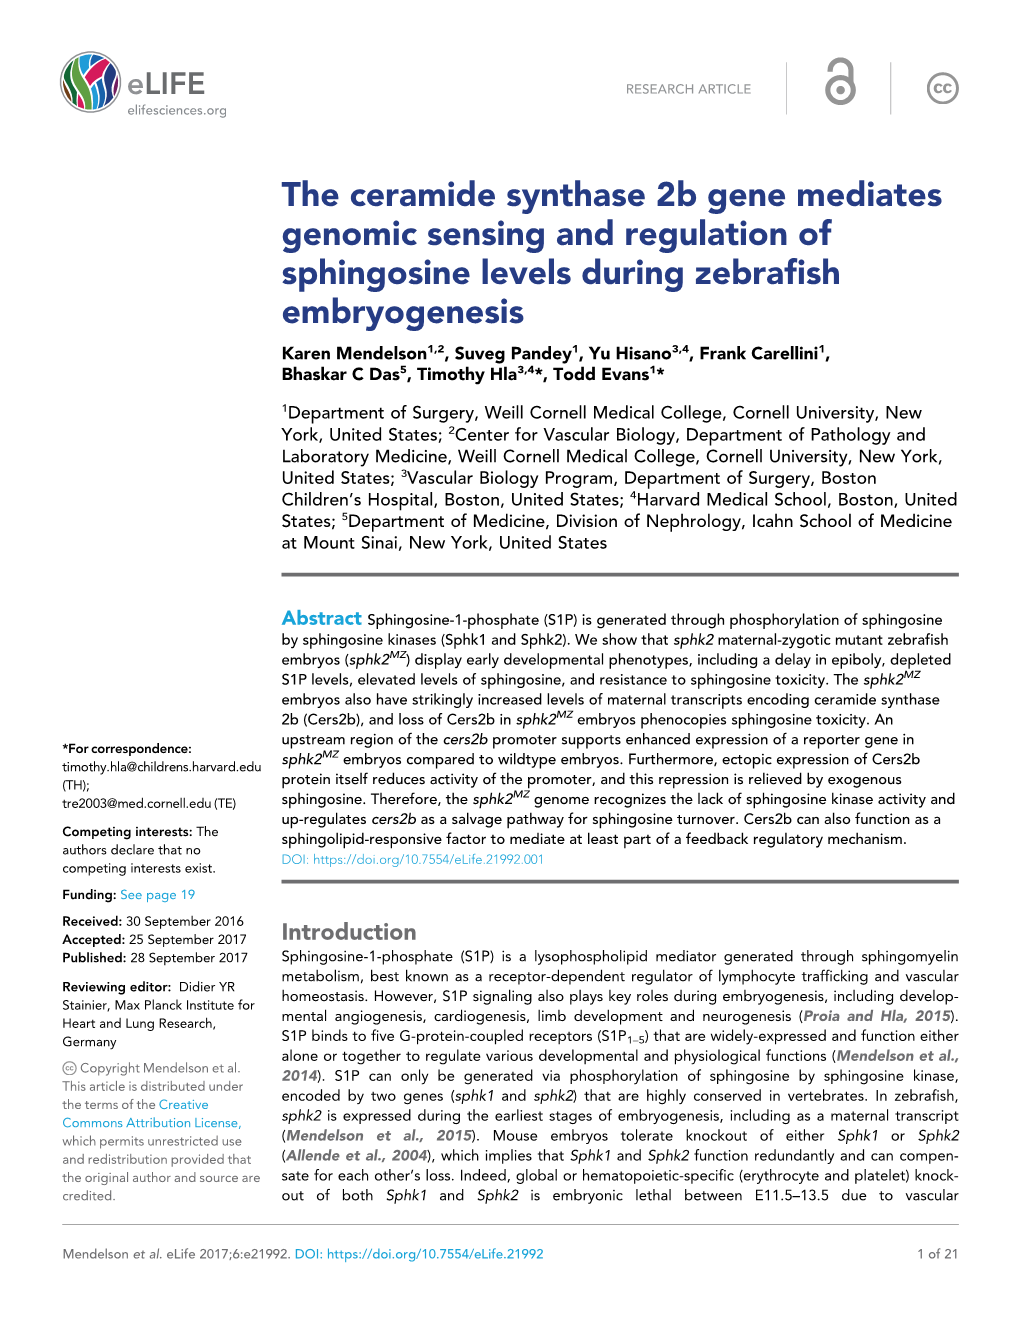 The Ceramide Synthase 2B Gene Mediates Genomic Sensing and Regulation of Sphingosine Levels During Zebrafish Embryogenesis